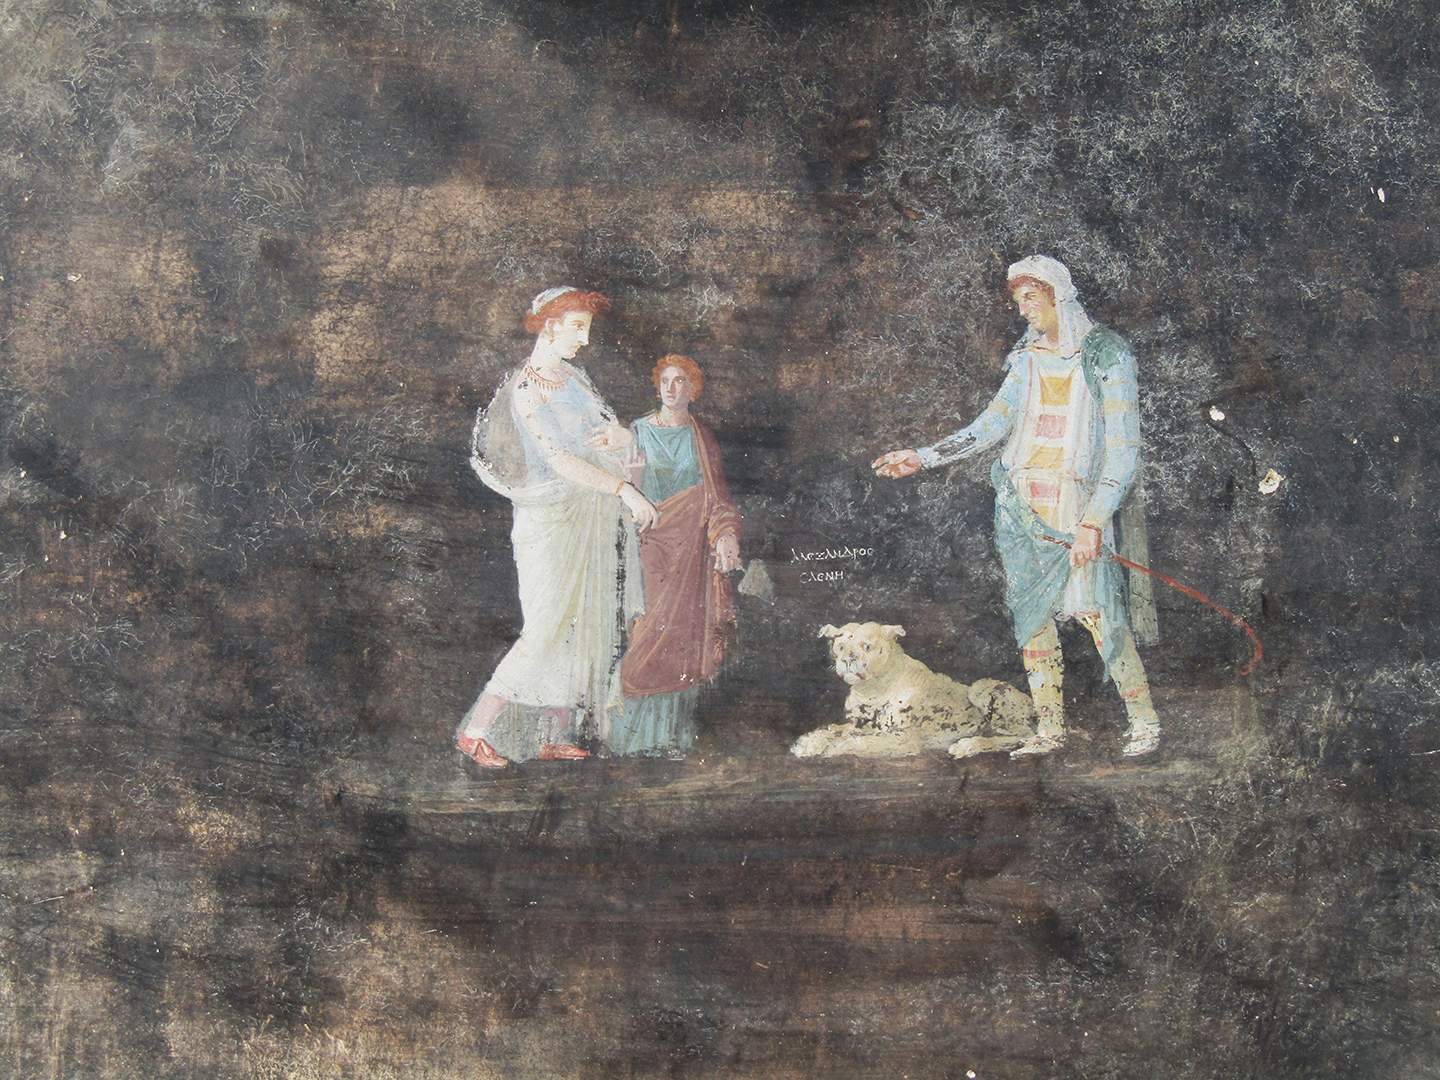 Pompeii, a frescoed ballroom discovered